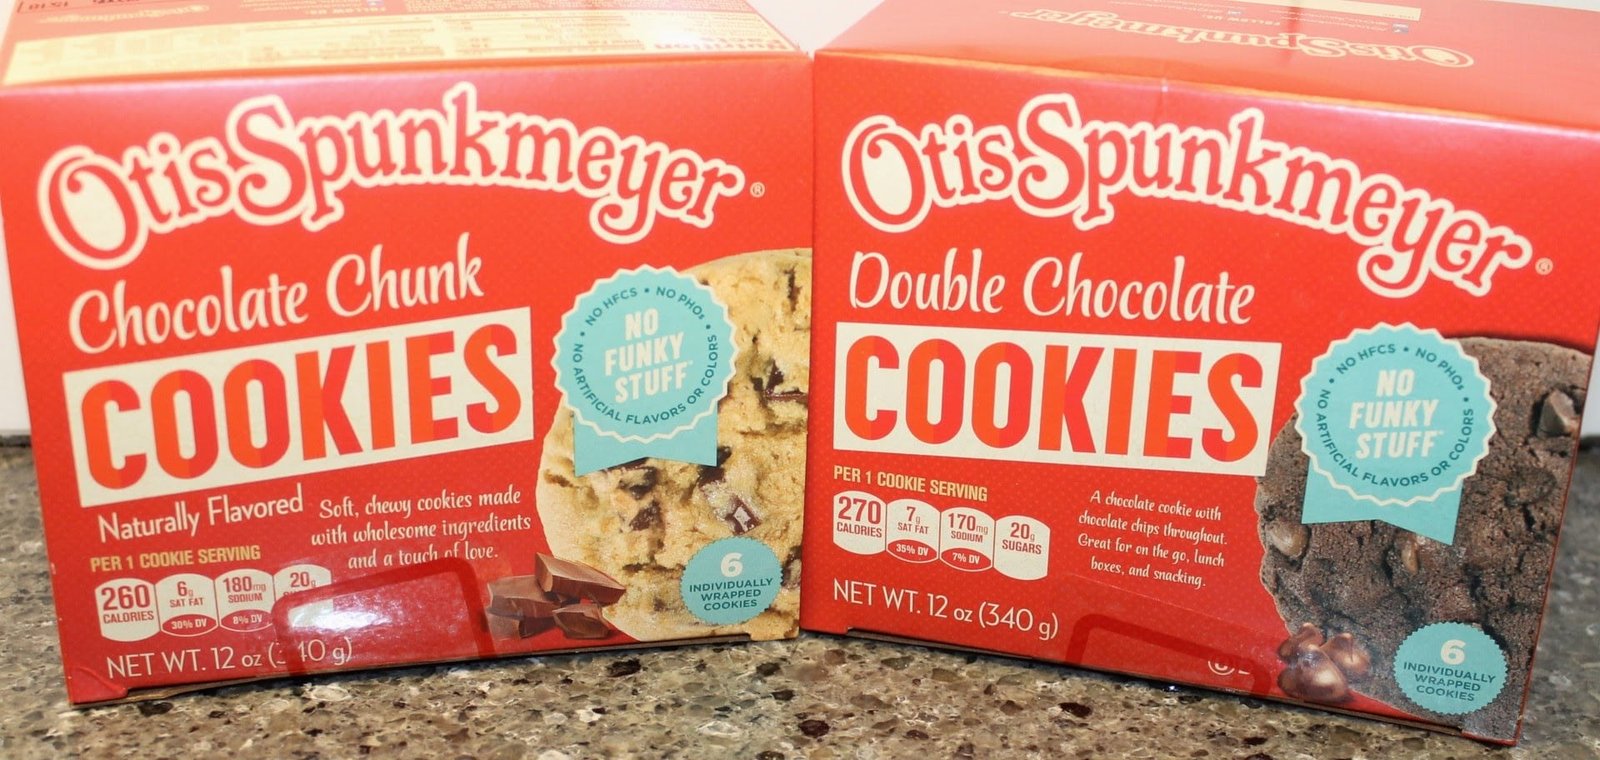 Otis Spunkmeyer Chocolate Chunk & Double Chocolate Cookies Review